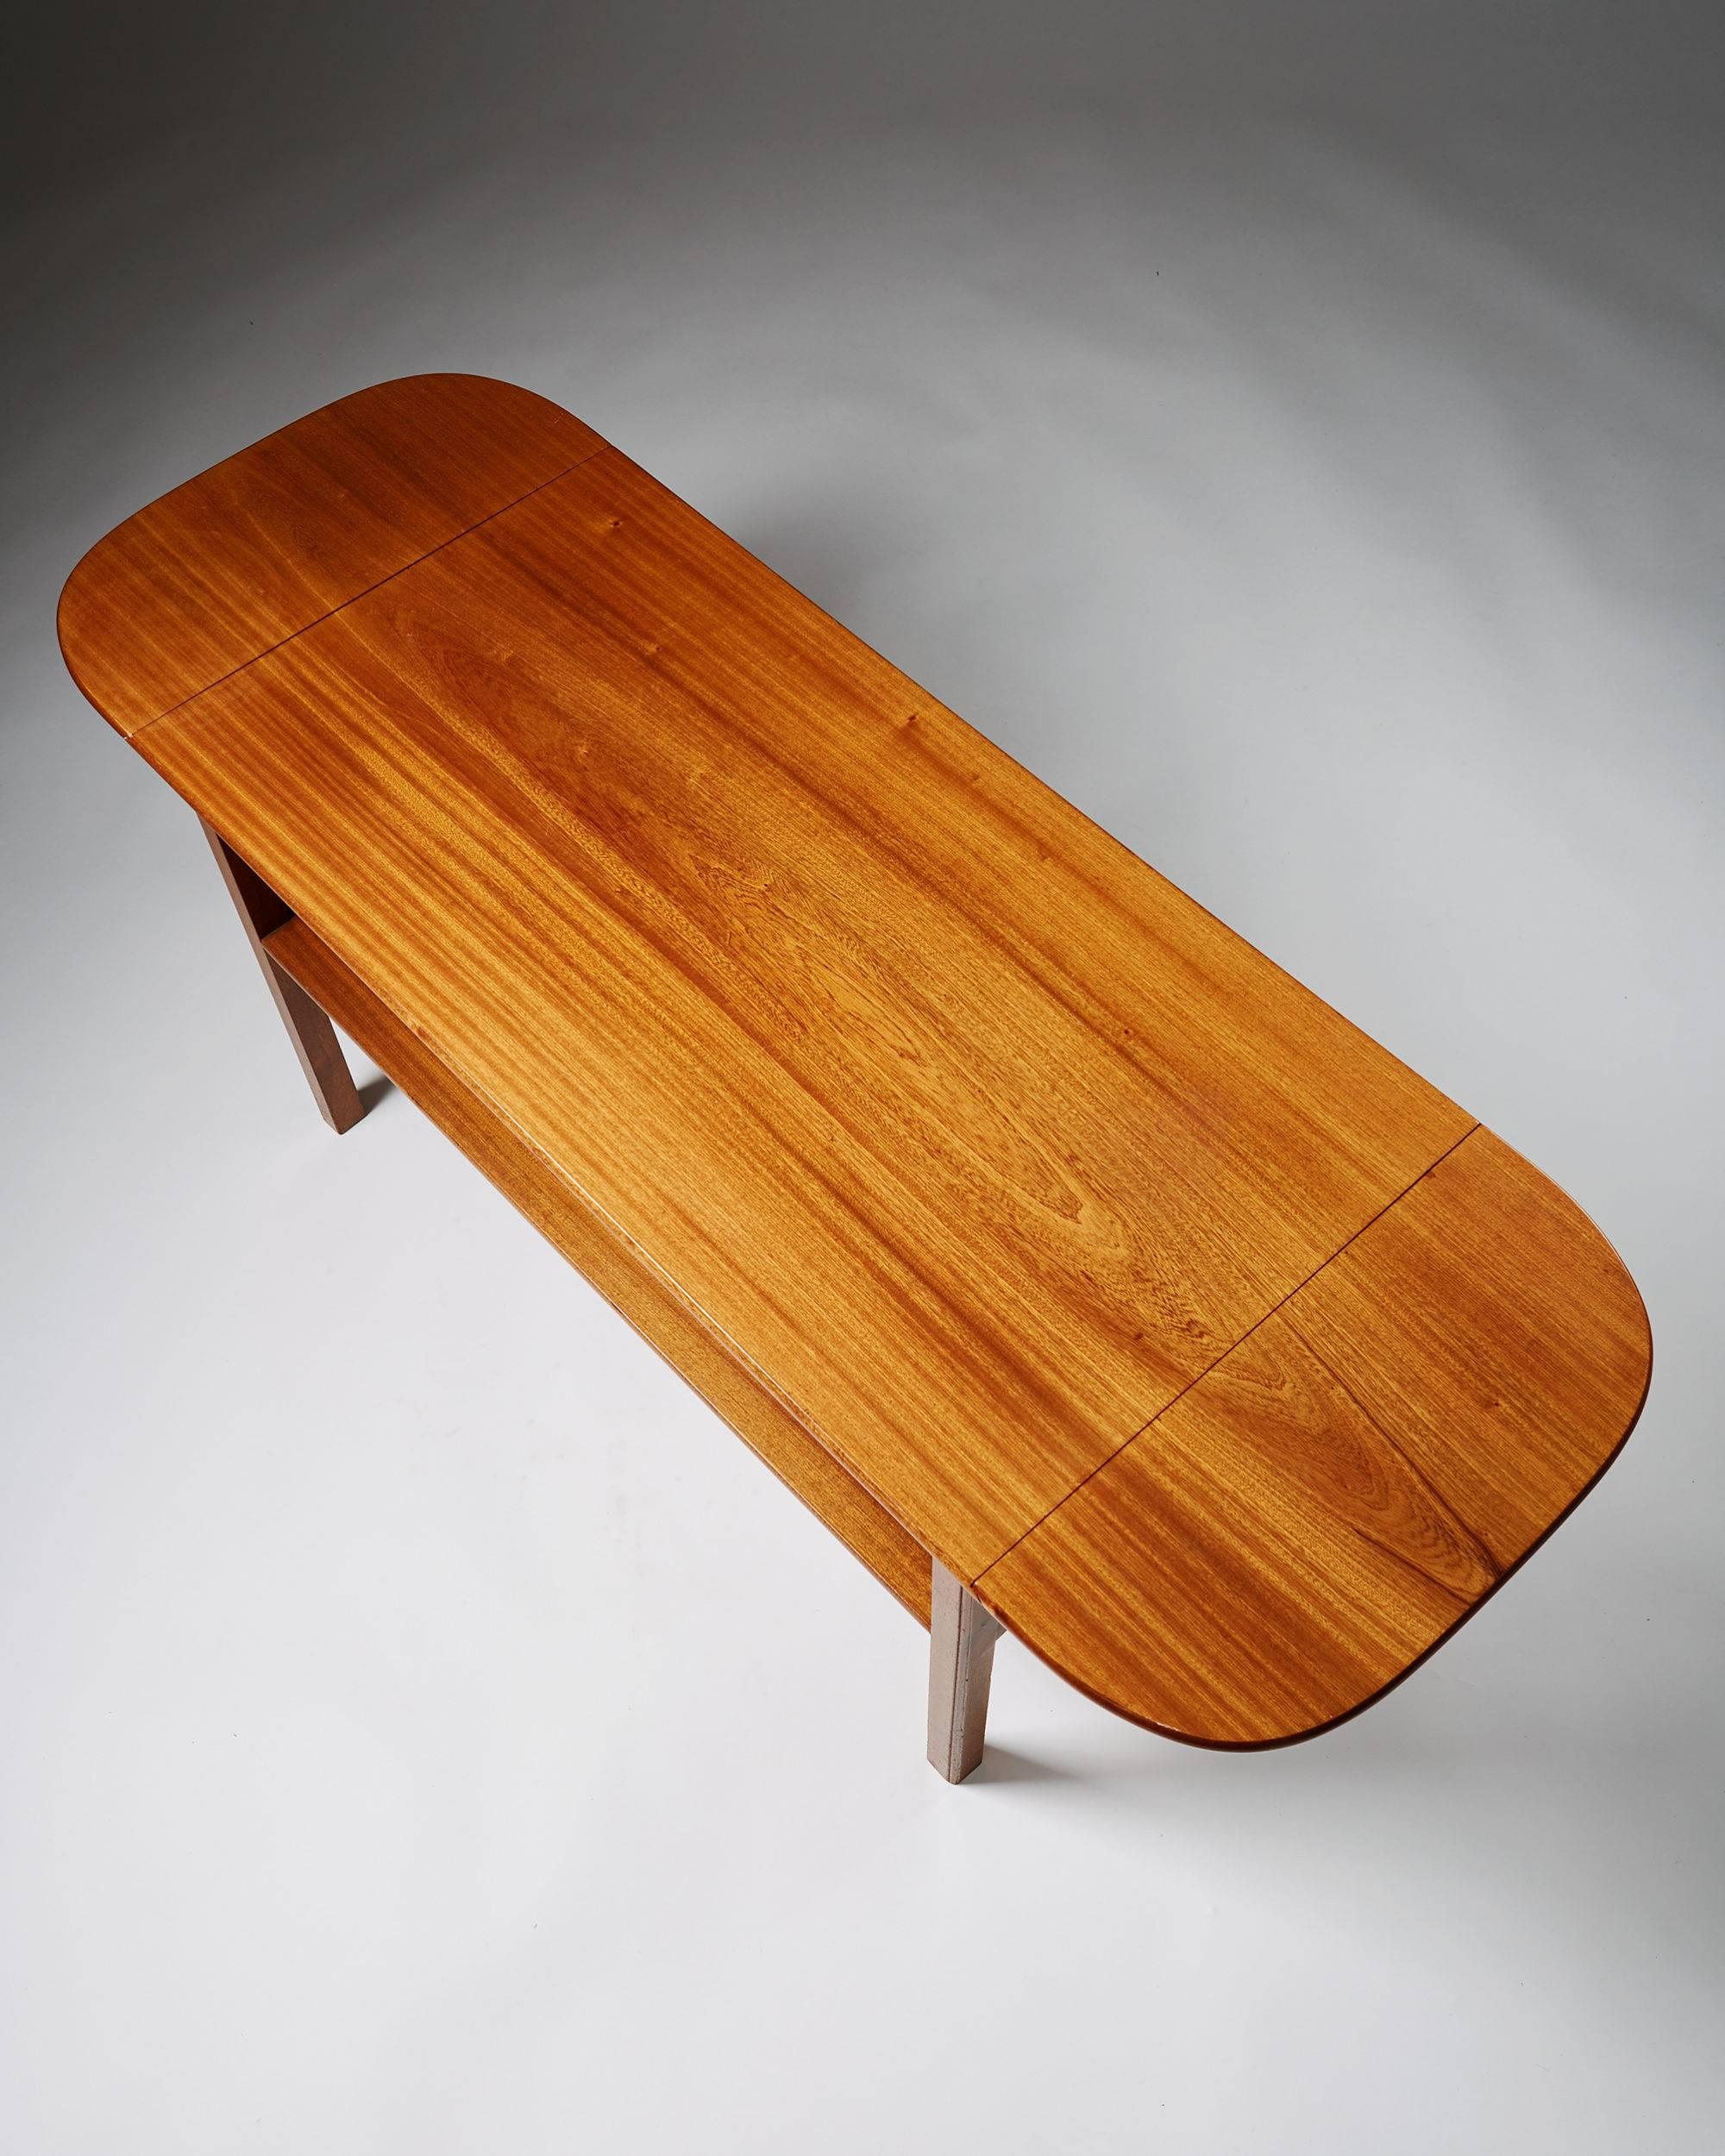 Mahogany Occasional Table Designed by Josef Frank for Svenskt Tenn, Sweden, 1950s